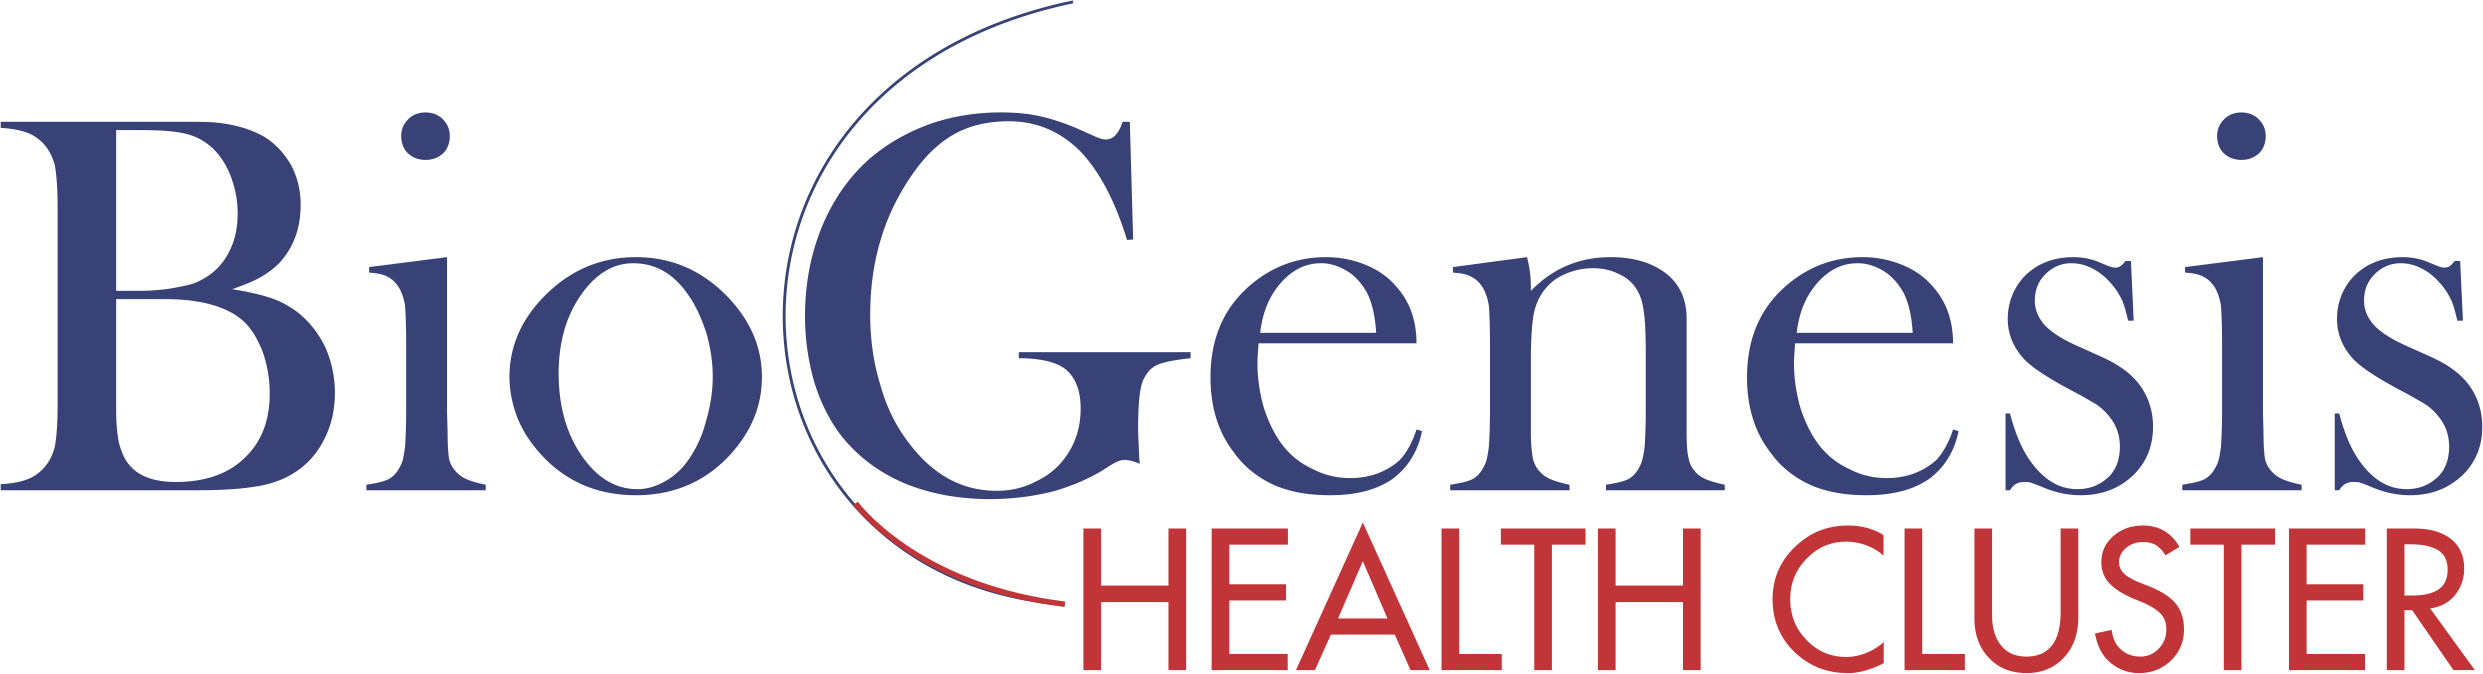 V World Congress on Gerontology & Geriatrics -2019